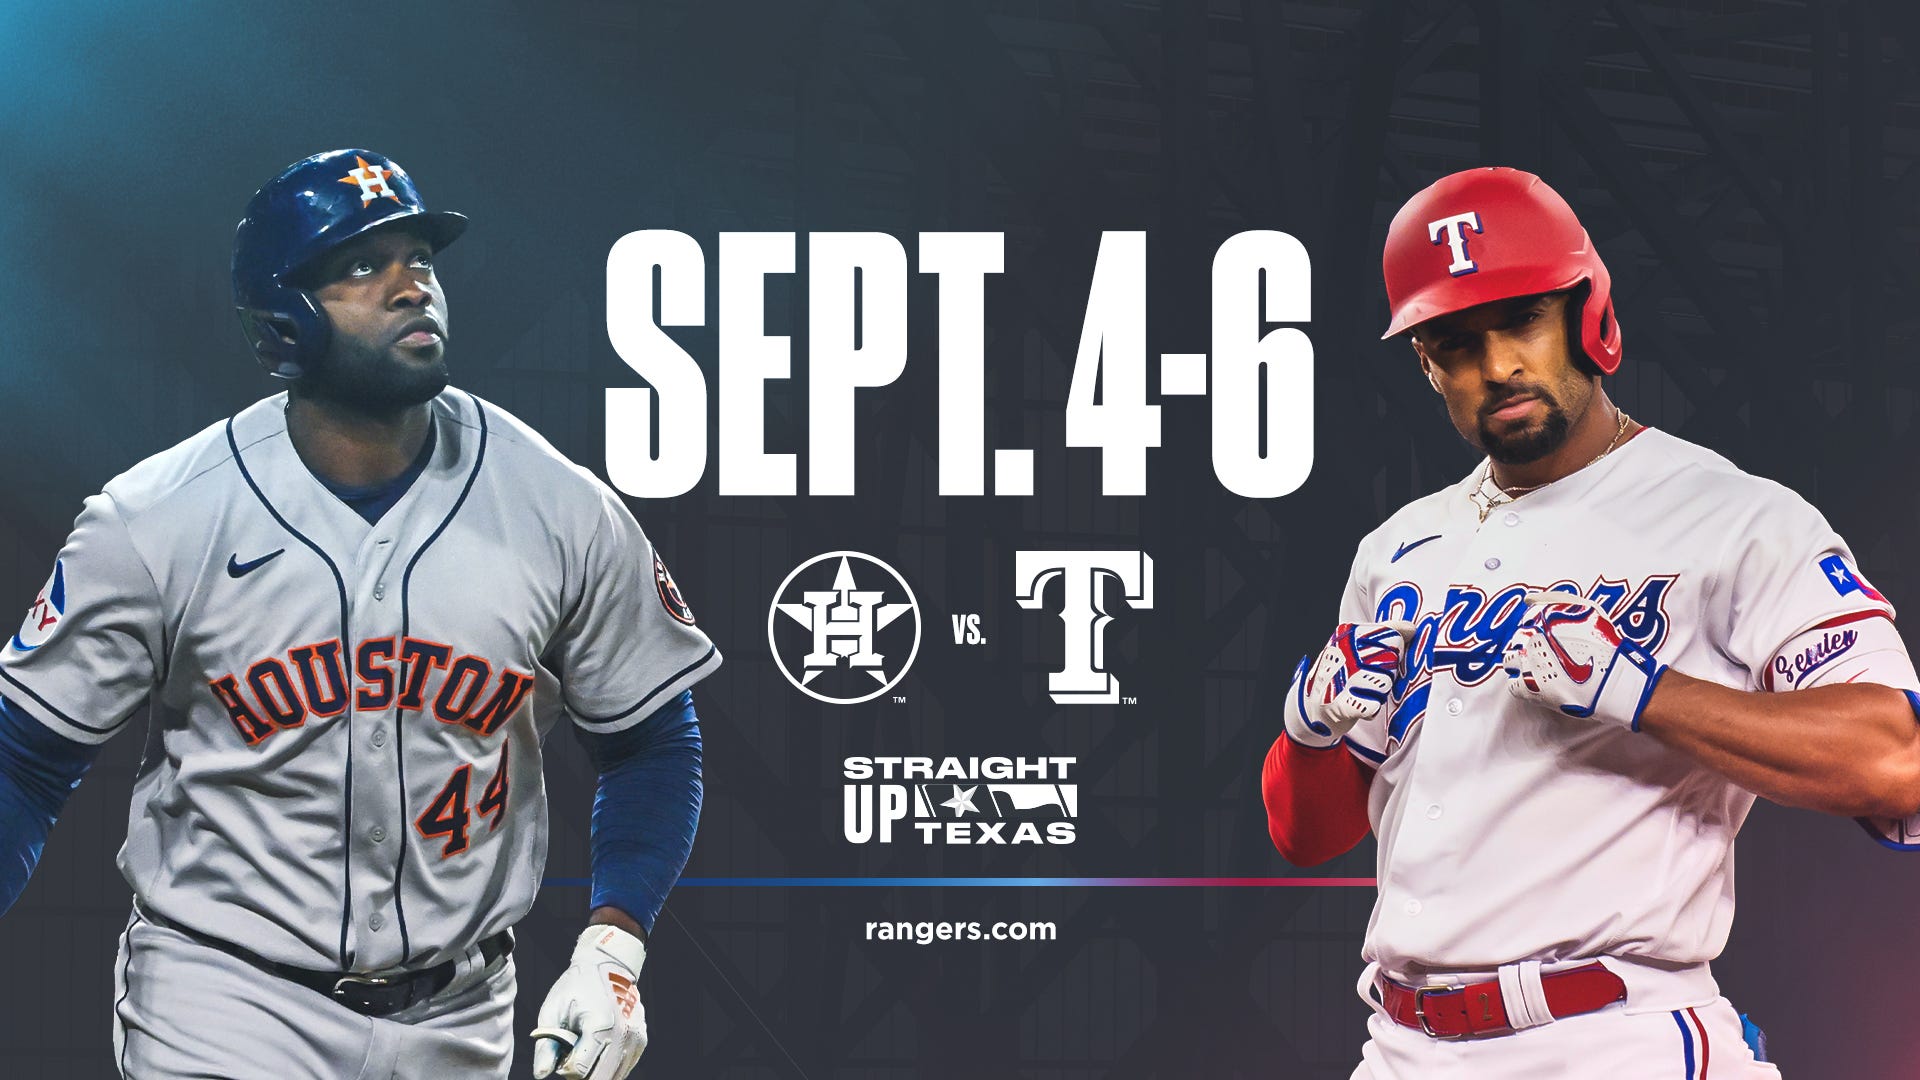 Houston Astros & Texas Rangers meet for Game 1 in an all-Texas